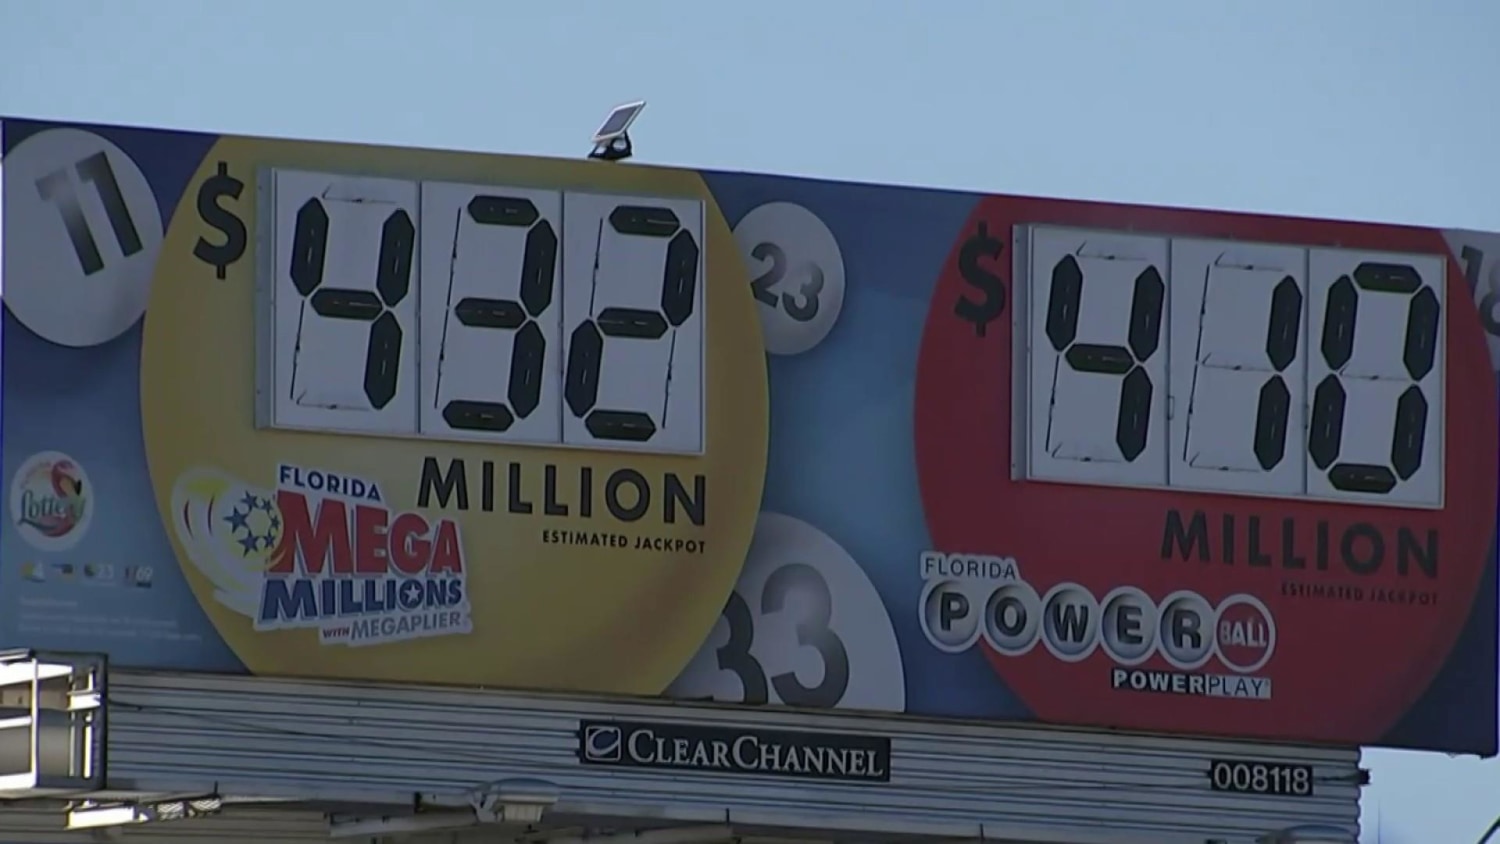 Powerball, Mega Millions each offer jackpots over half a billion